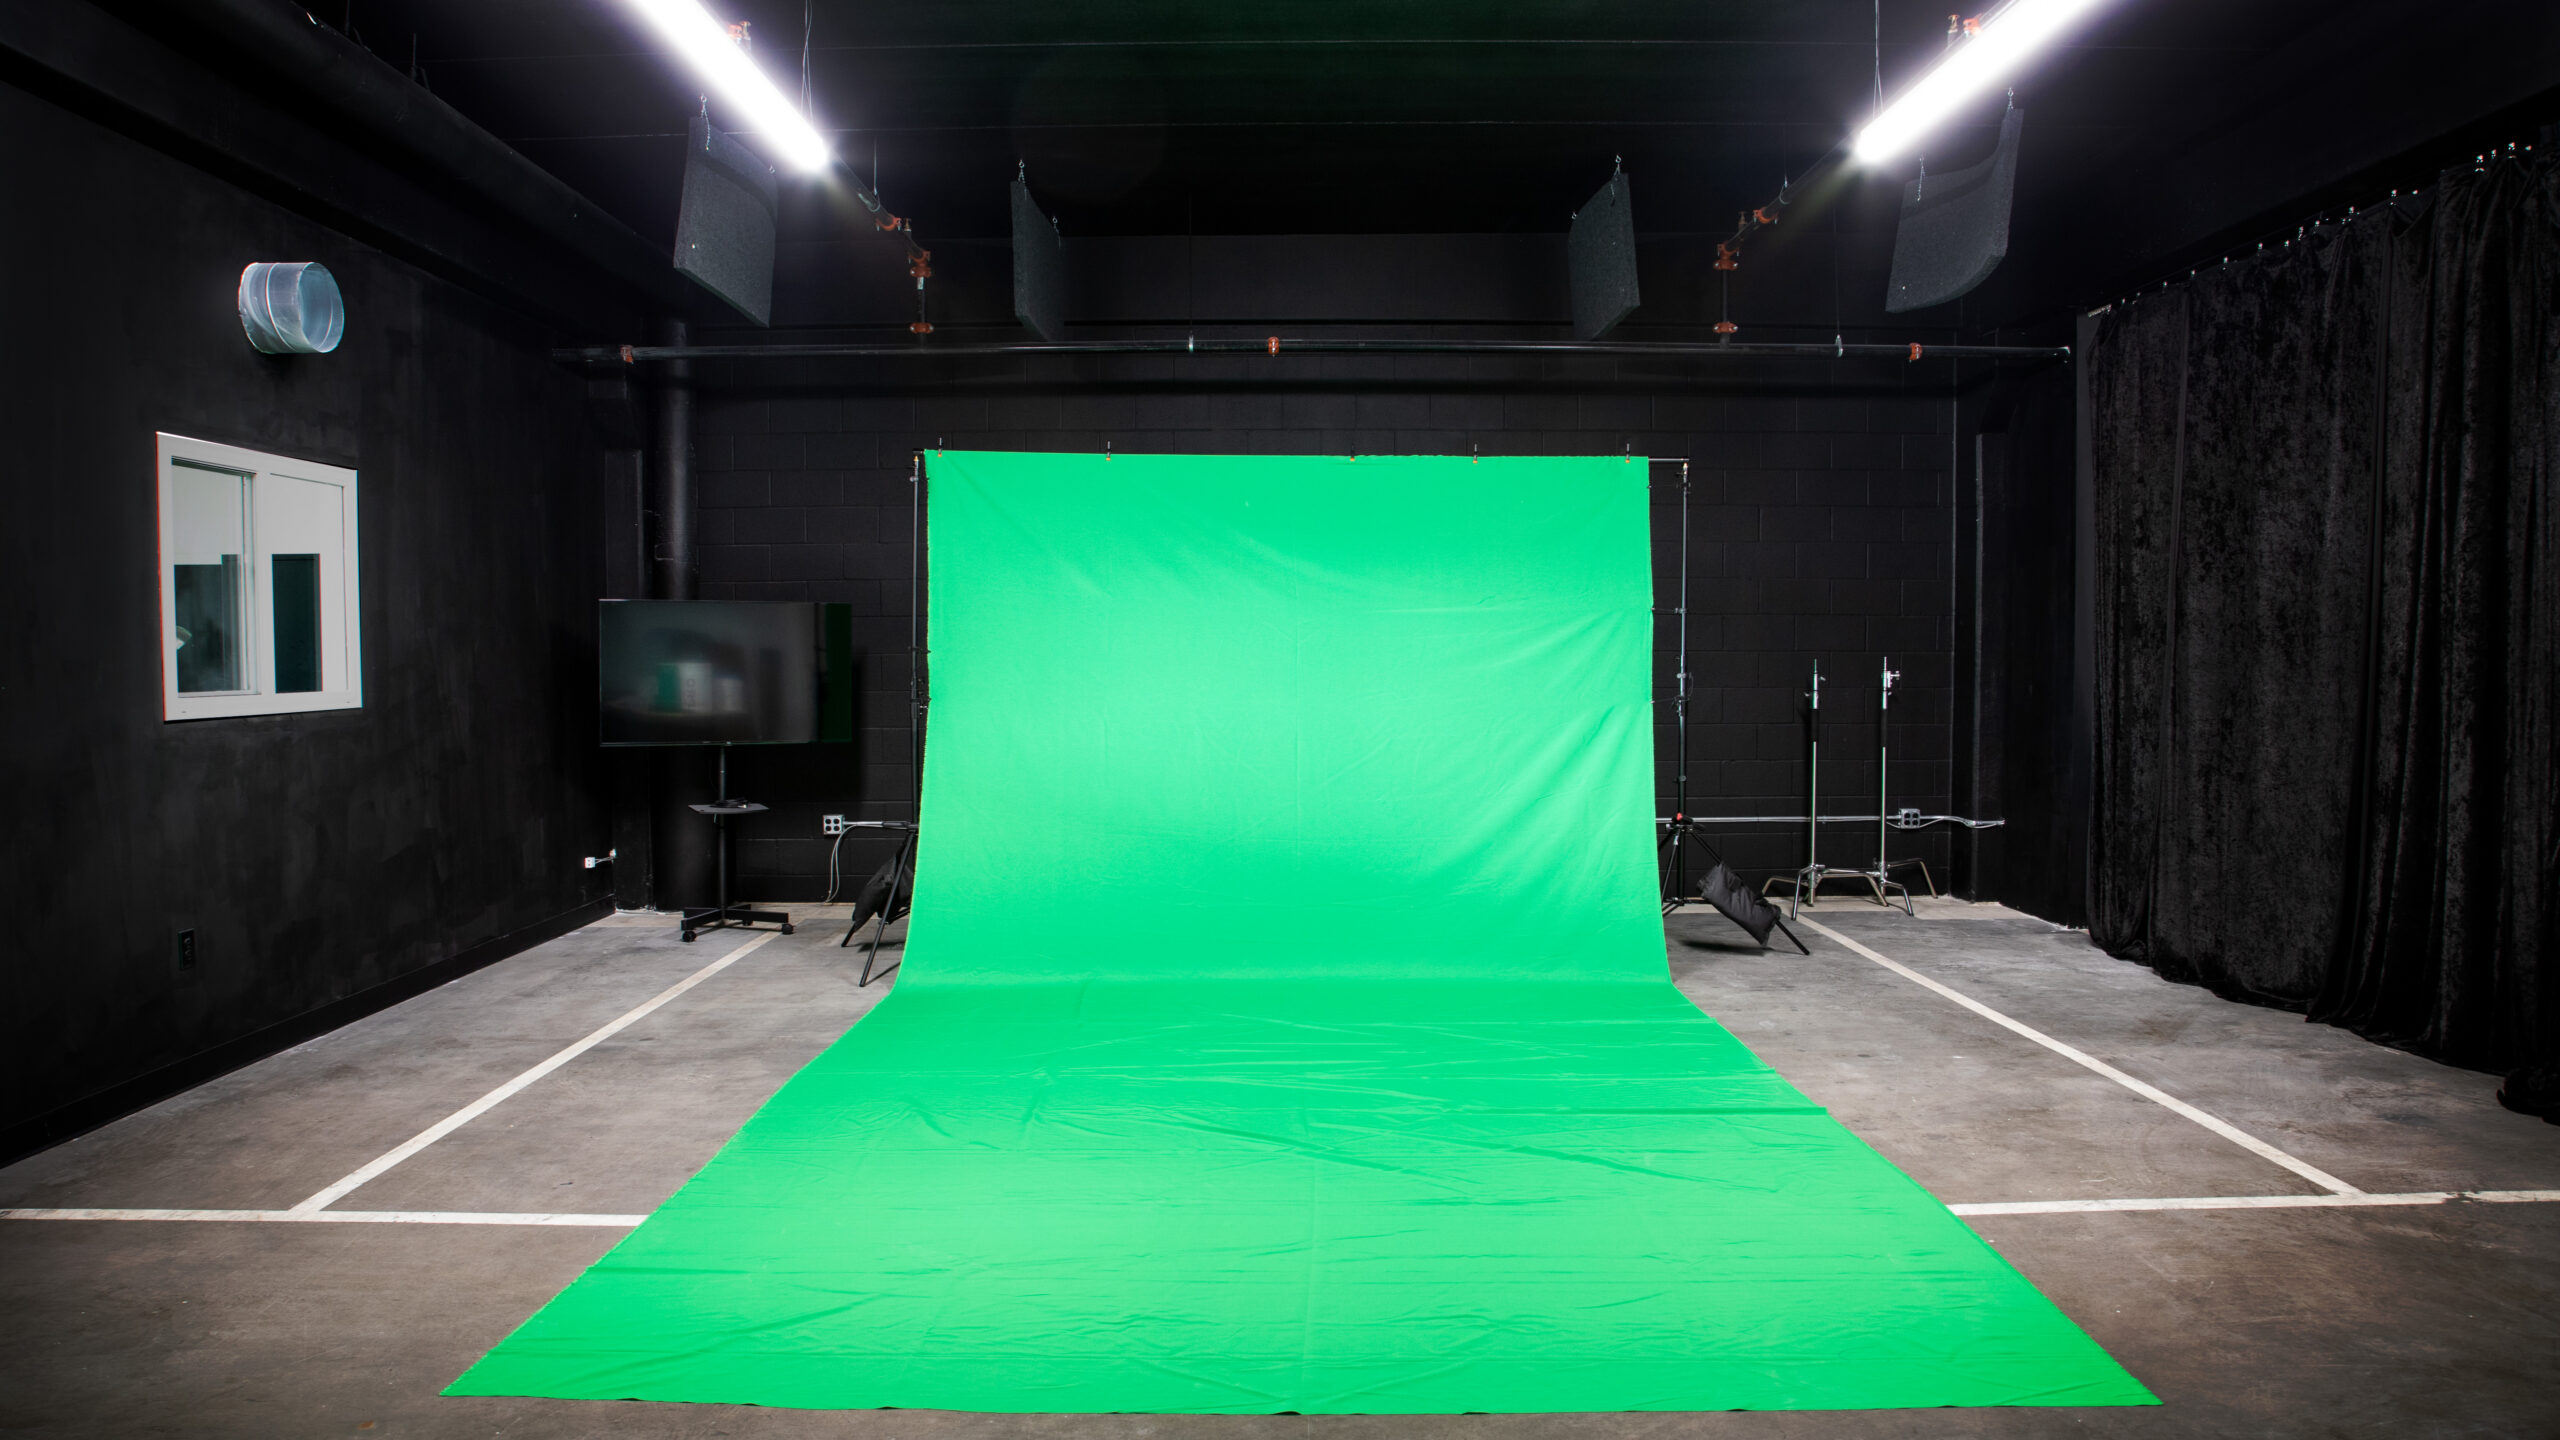 Photo of Flex Studio in Rockstoria Studios, showing green screen and TV monitors